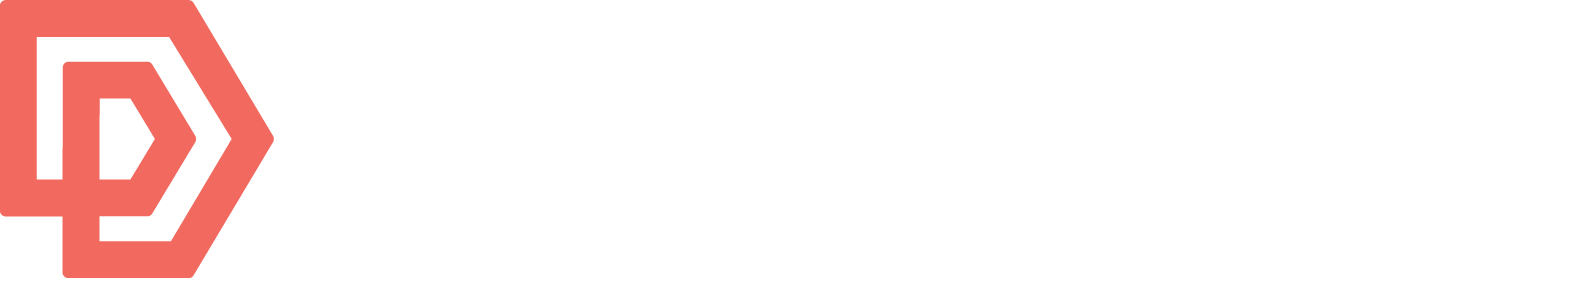 duoproductnordic_logo_vaaka-logo-inverted-rgb